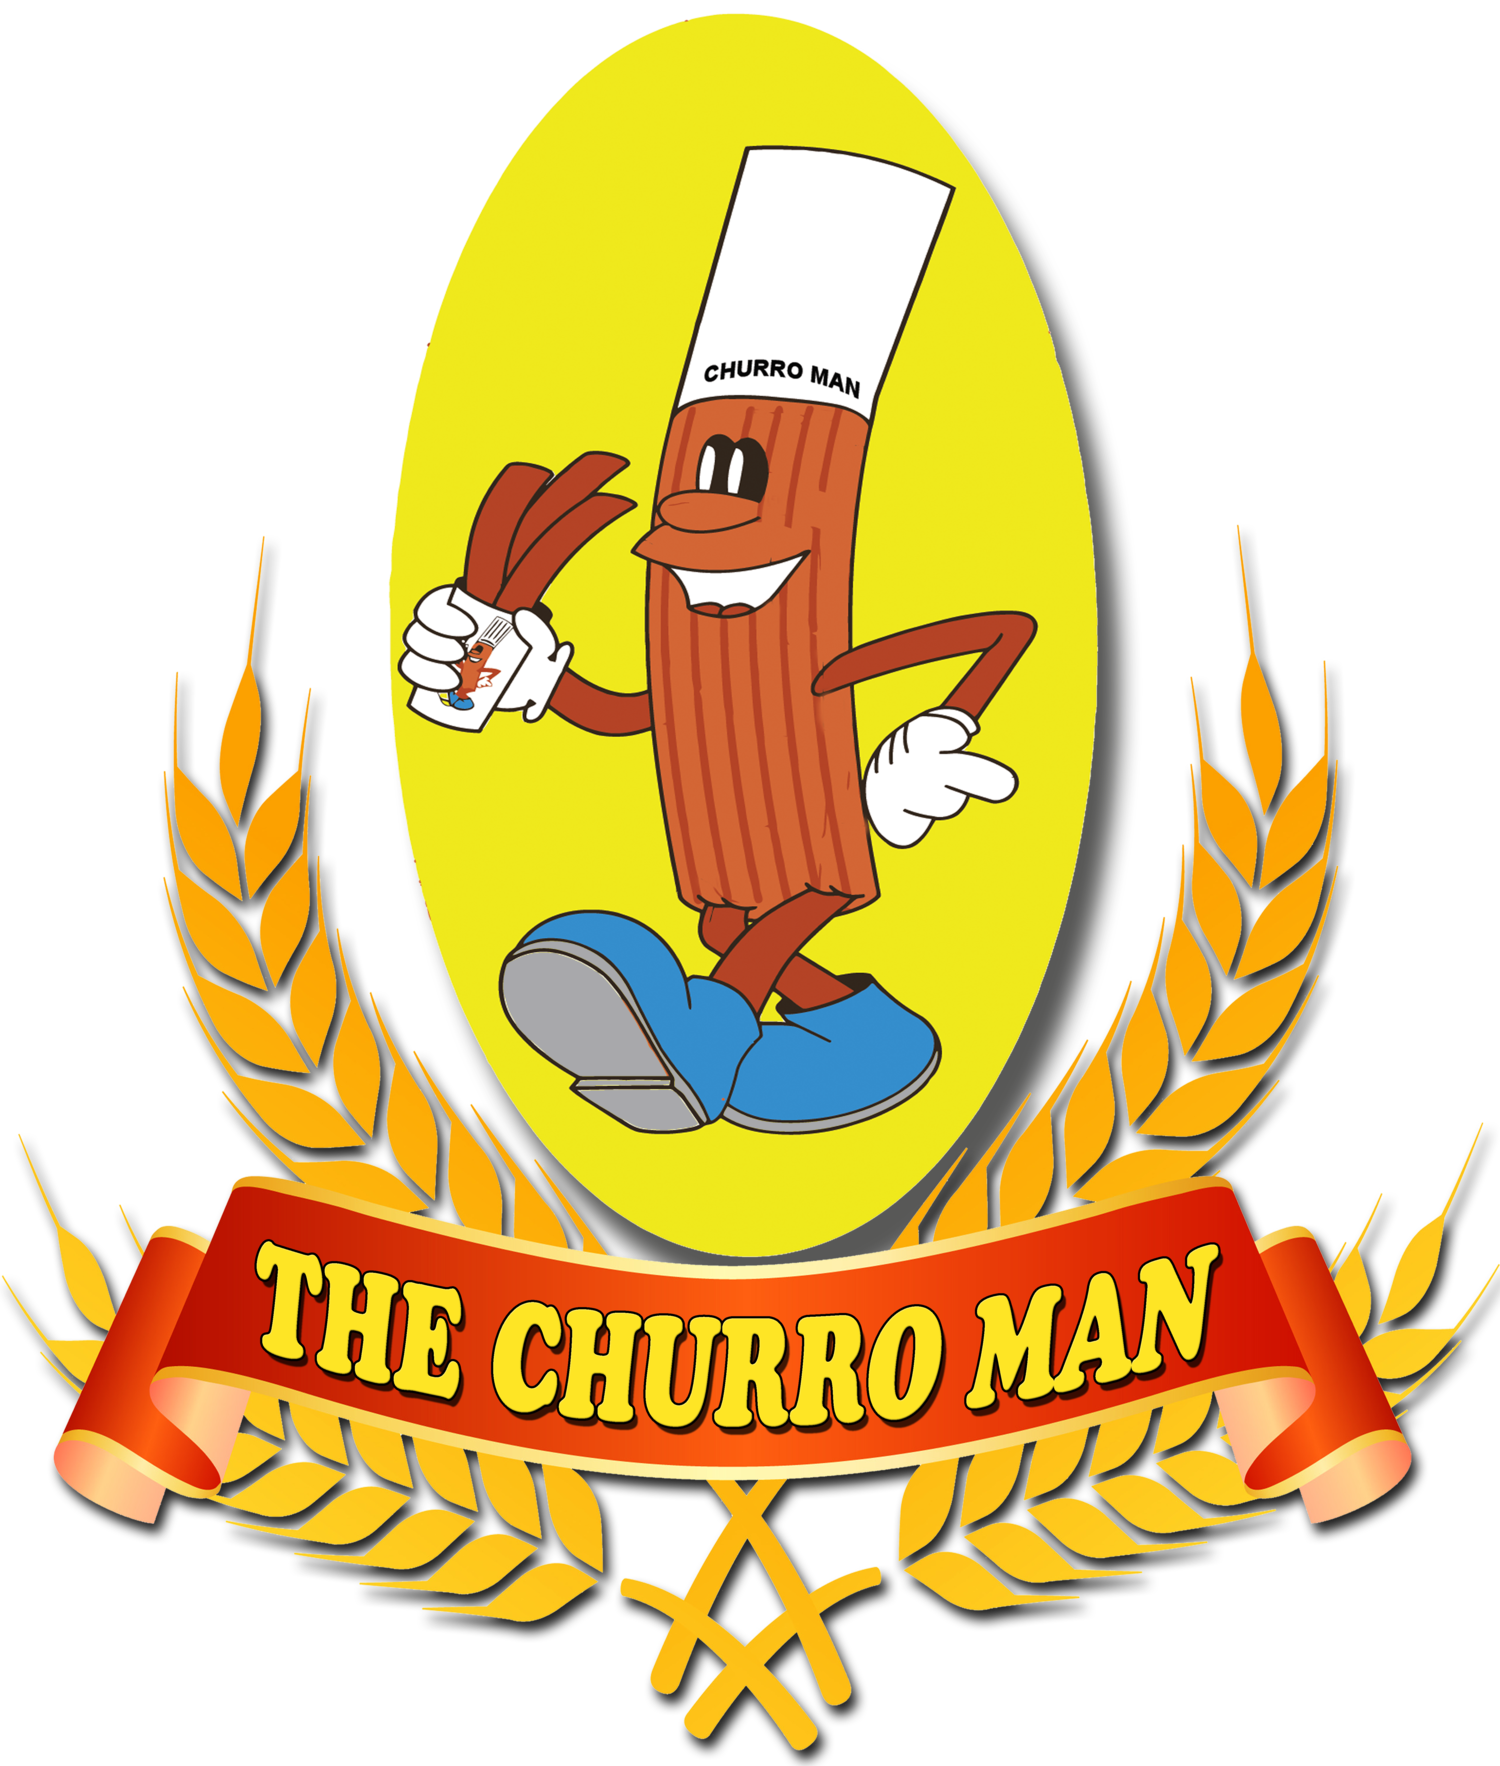 The Churro Man